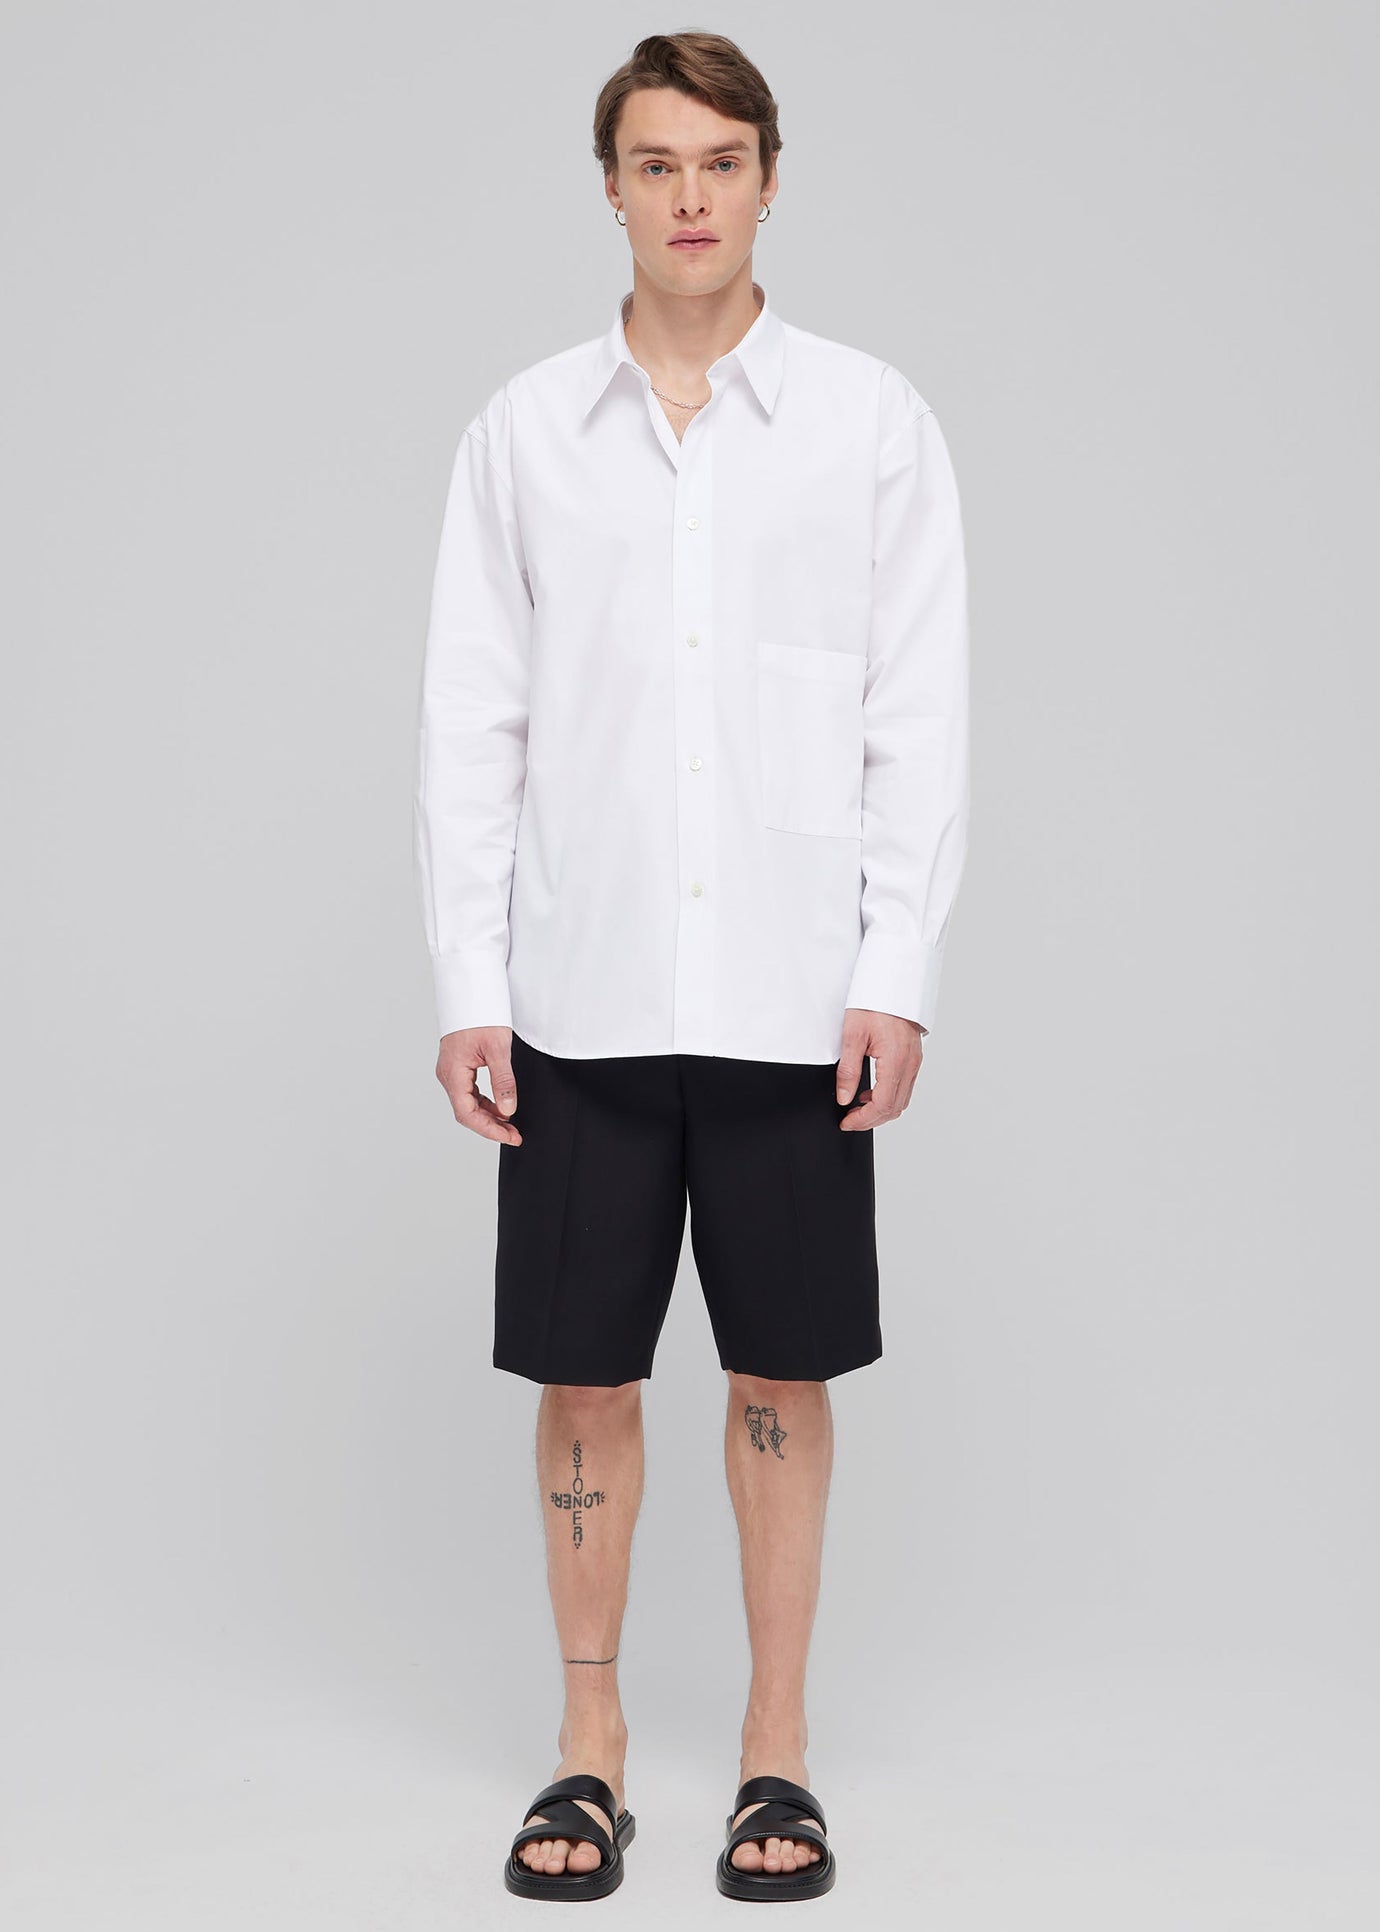 Róhe Unisex Classic Shirt - White - 1